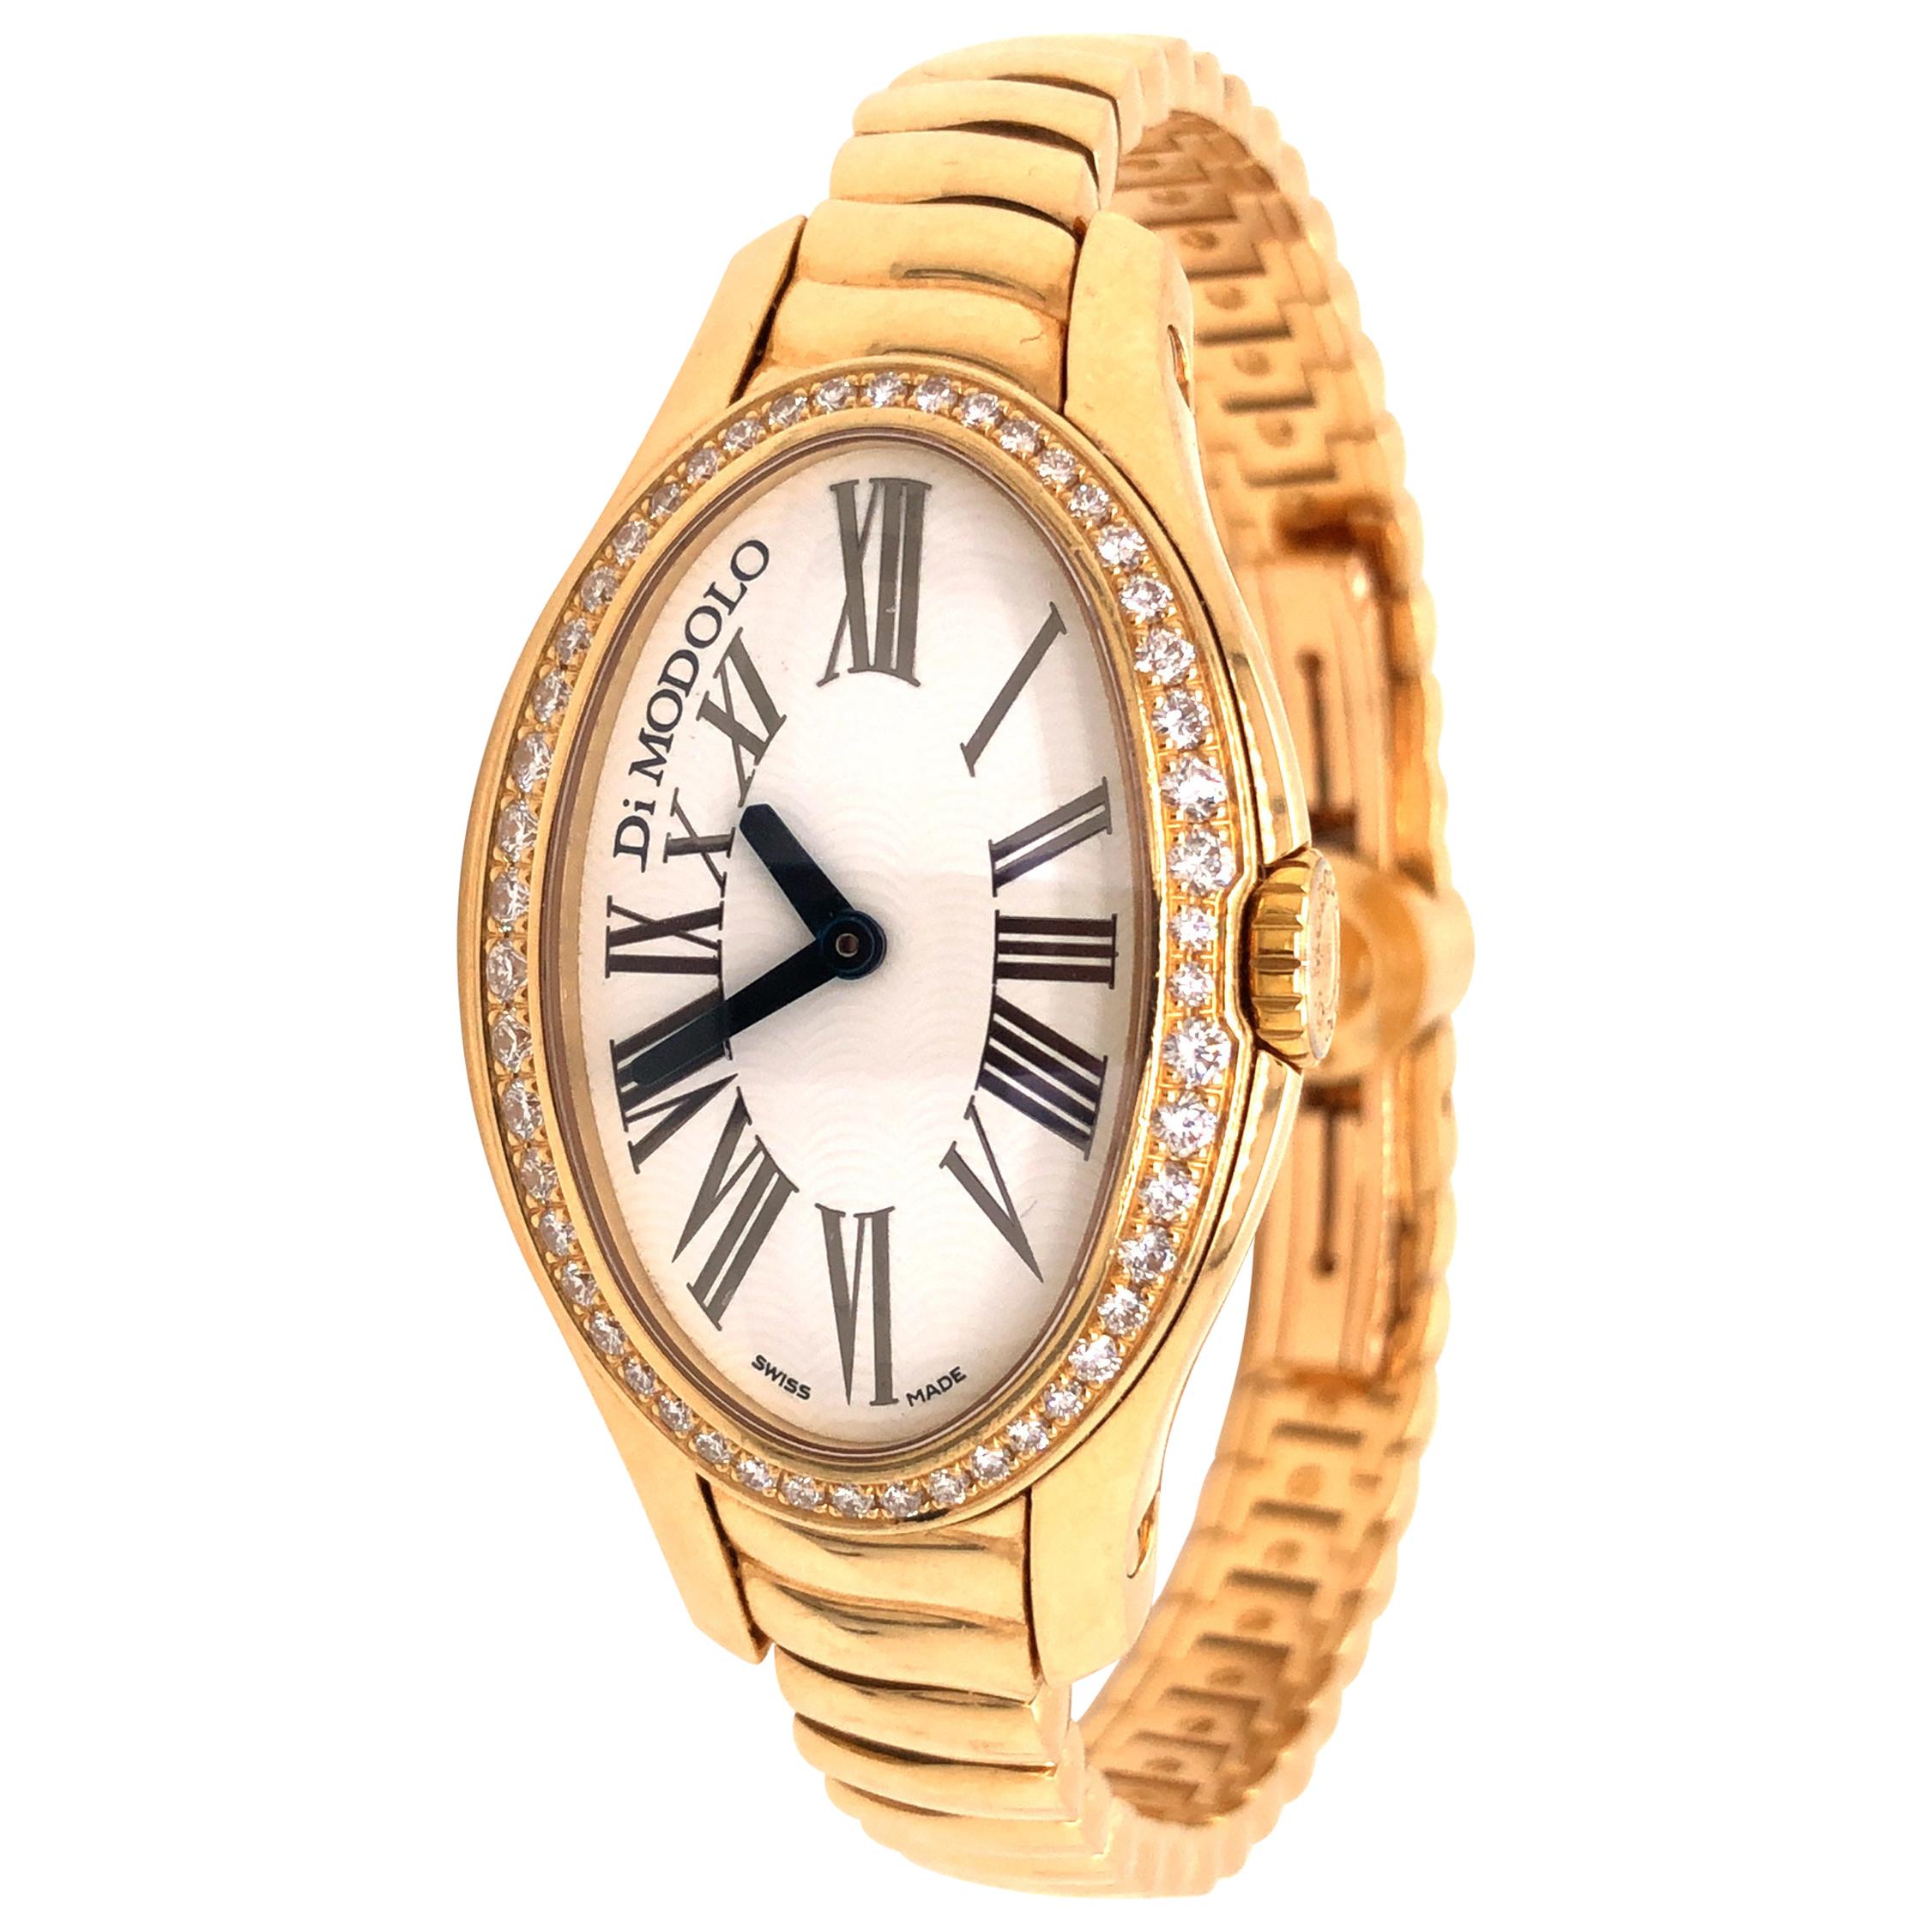 Di Modolo 18 Karat Yellow Gold Diamond Ladies Tempia Watch For Sale